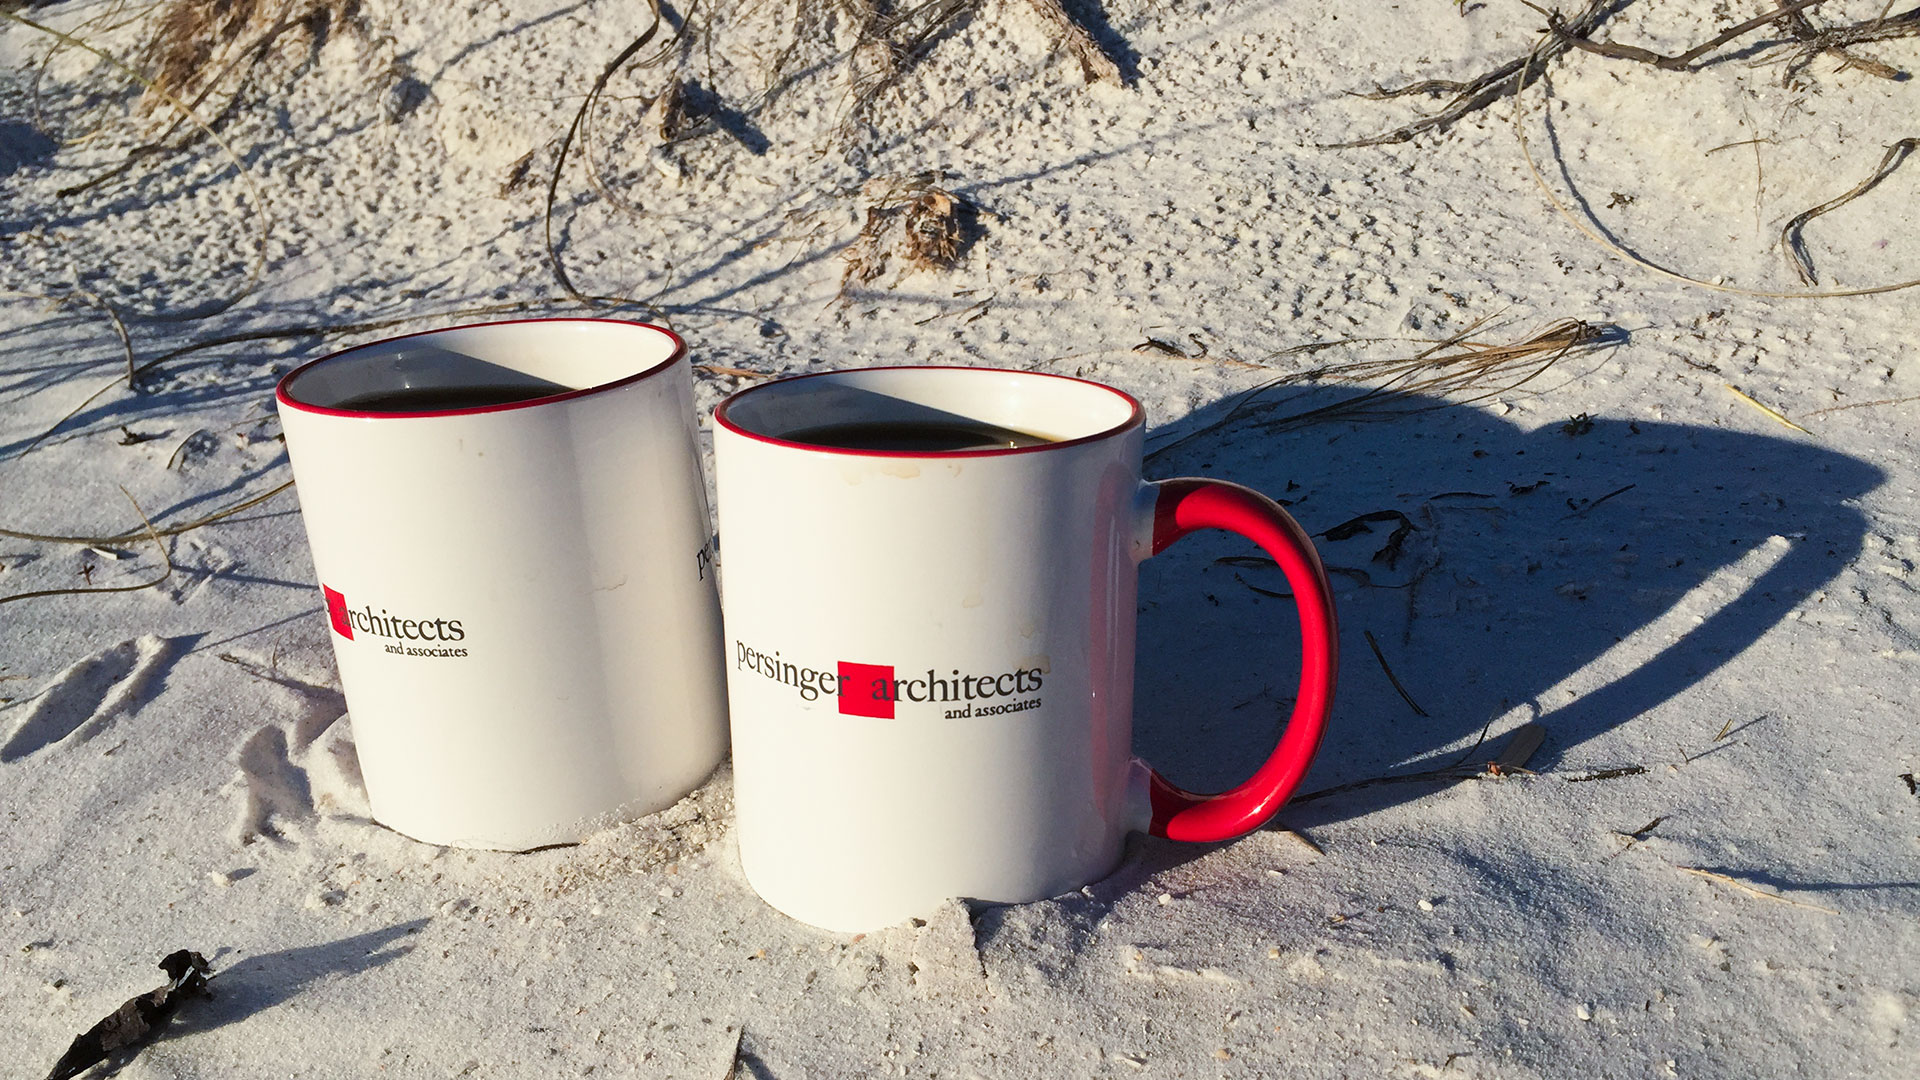 Pair of Persinger mugs sitting on a sandy beach